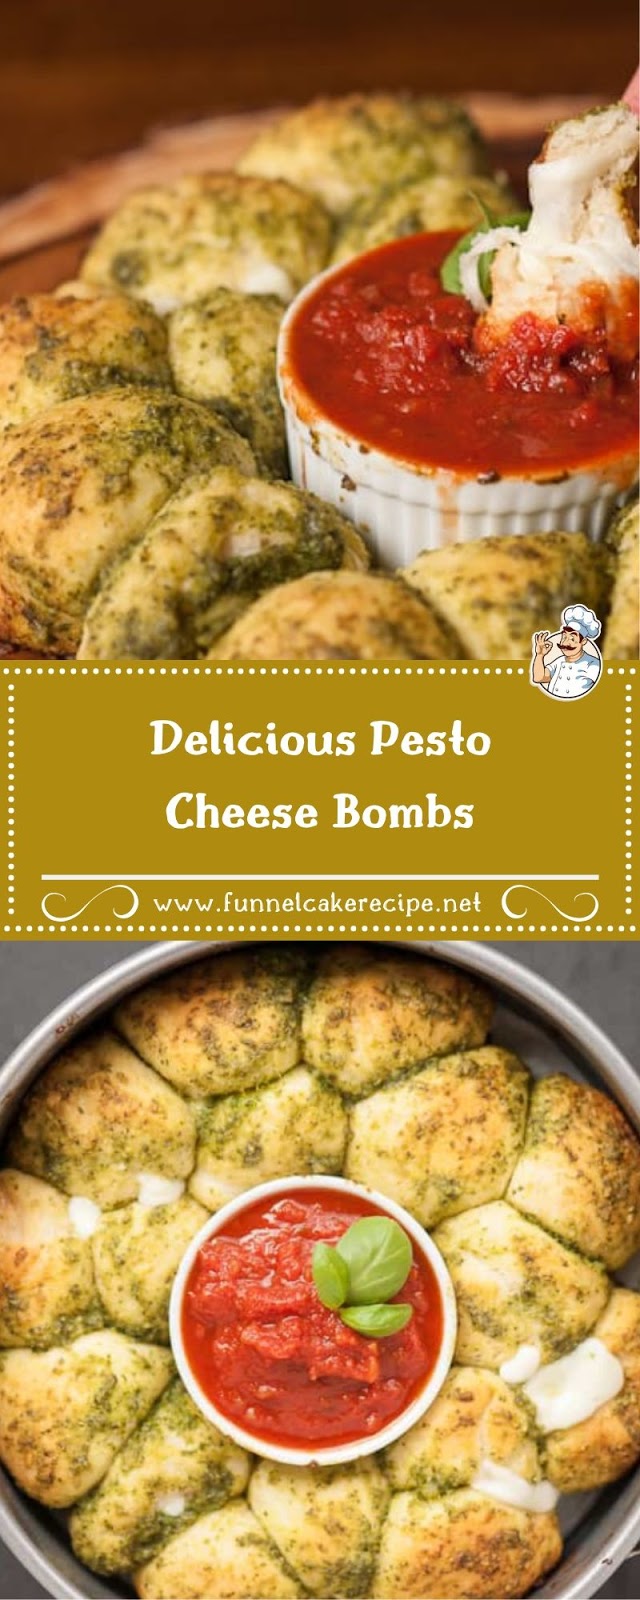 Delicious Pesto Cheese Bombs